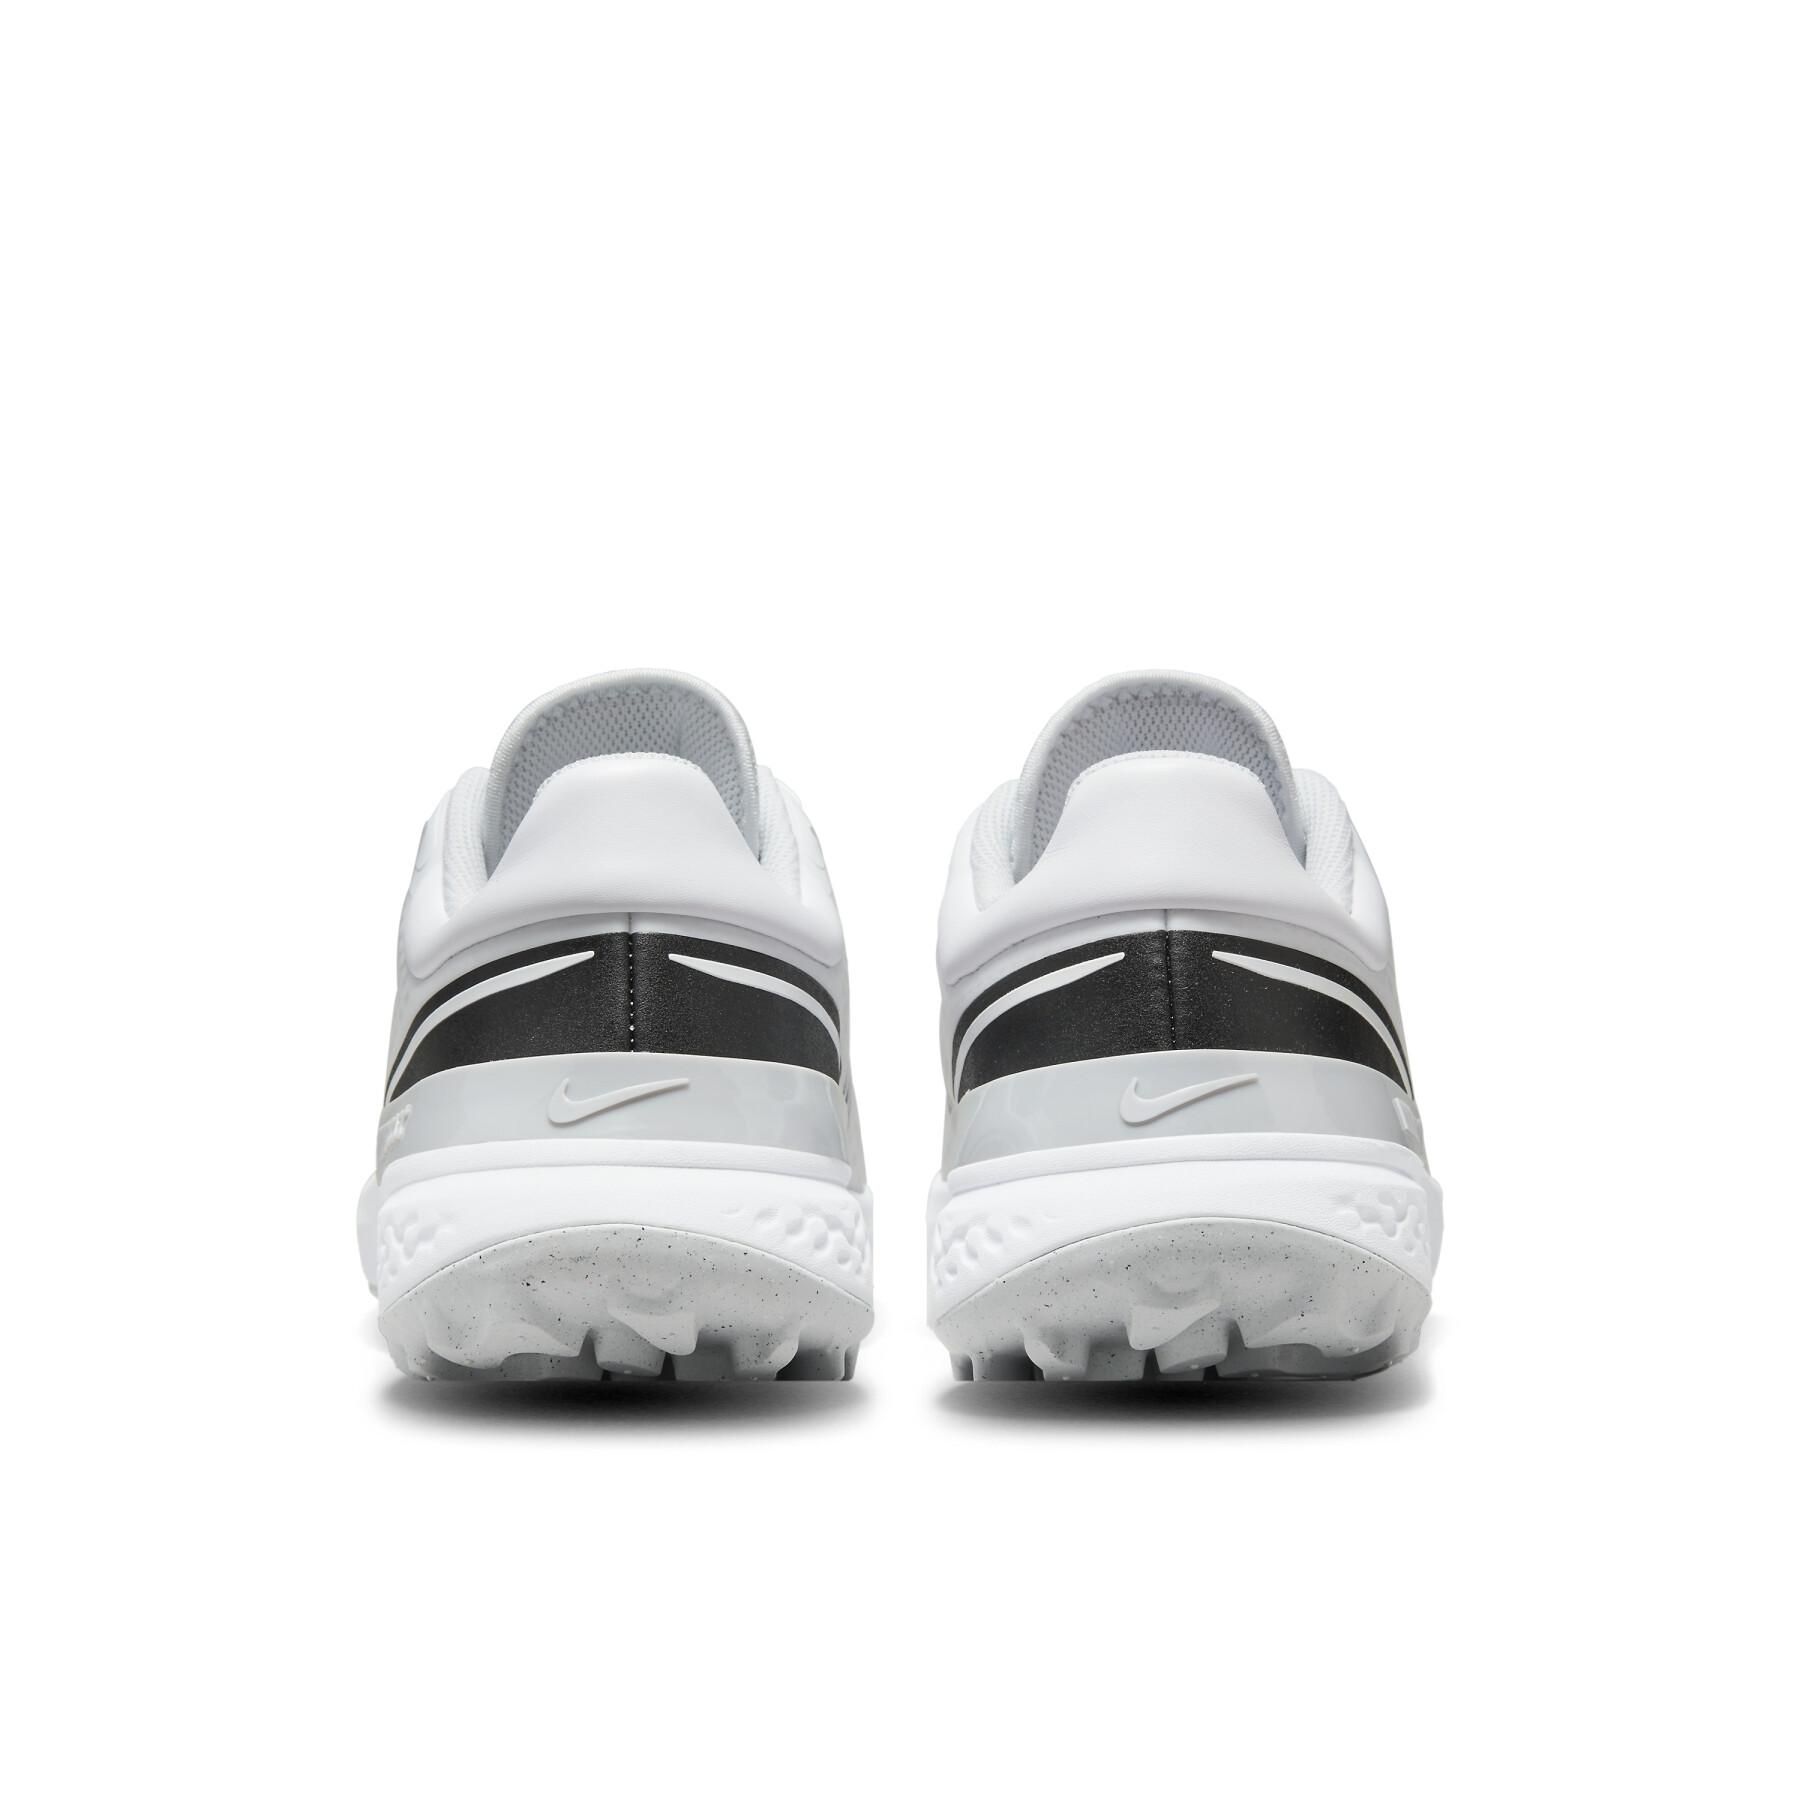 Zapatos de golf para niños Nike Infinity Pro 2